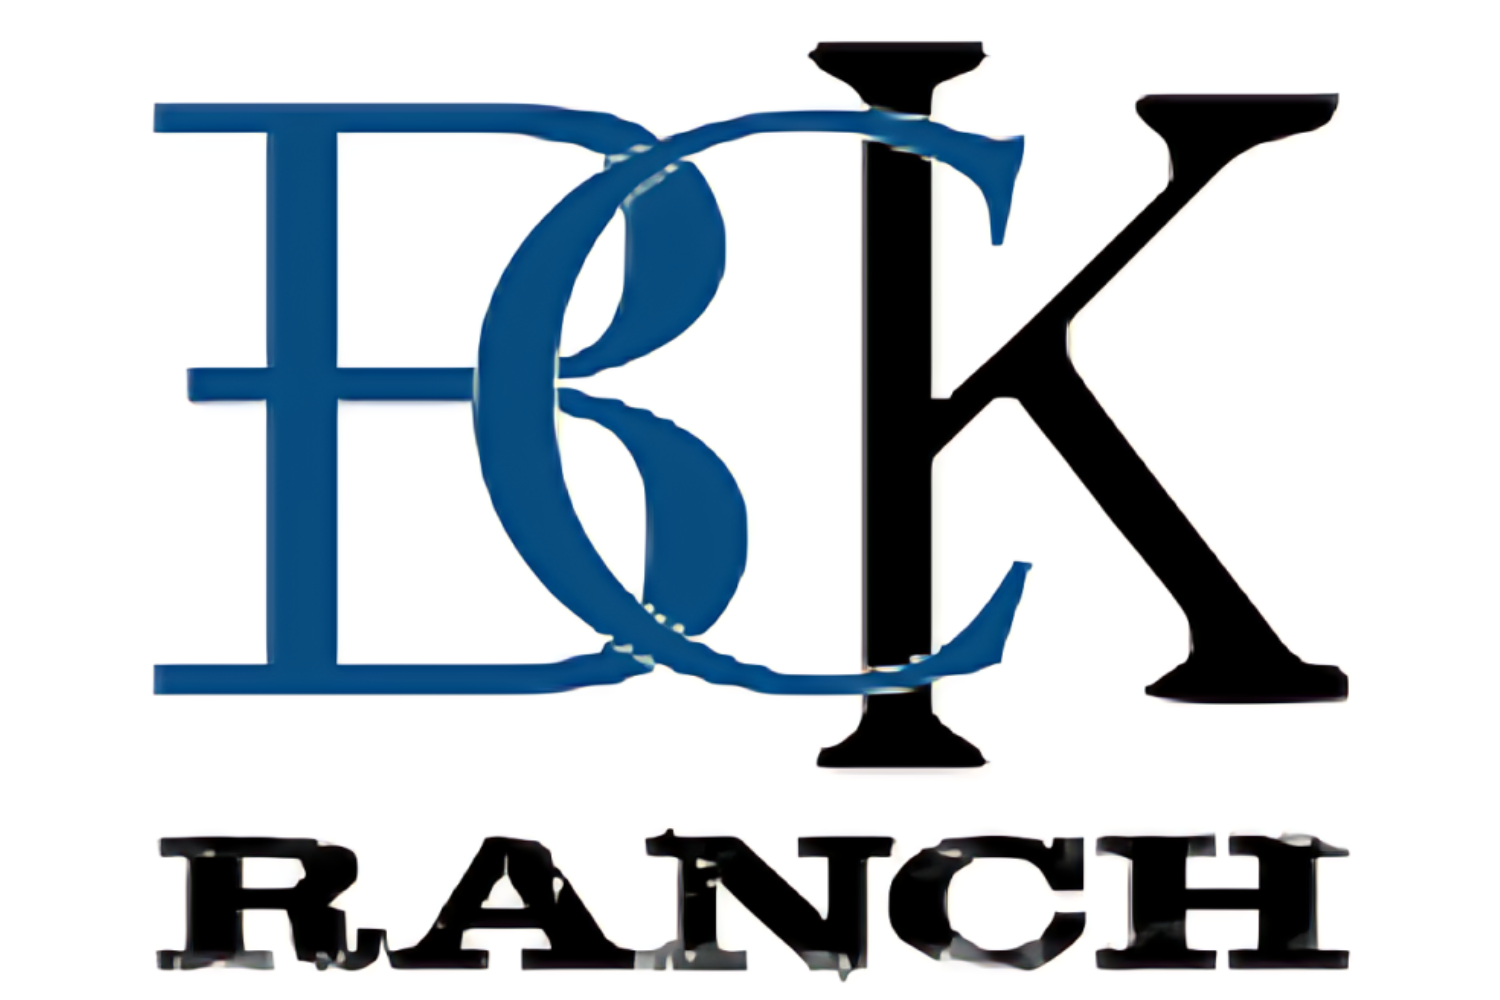 BCK Ranch